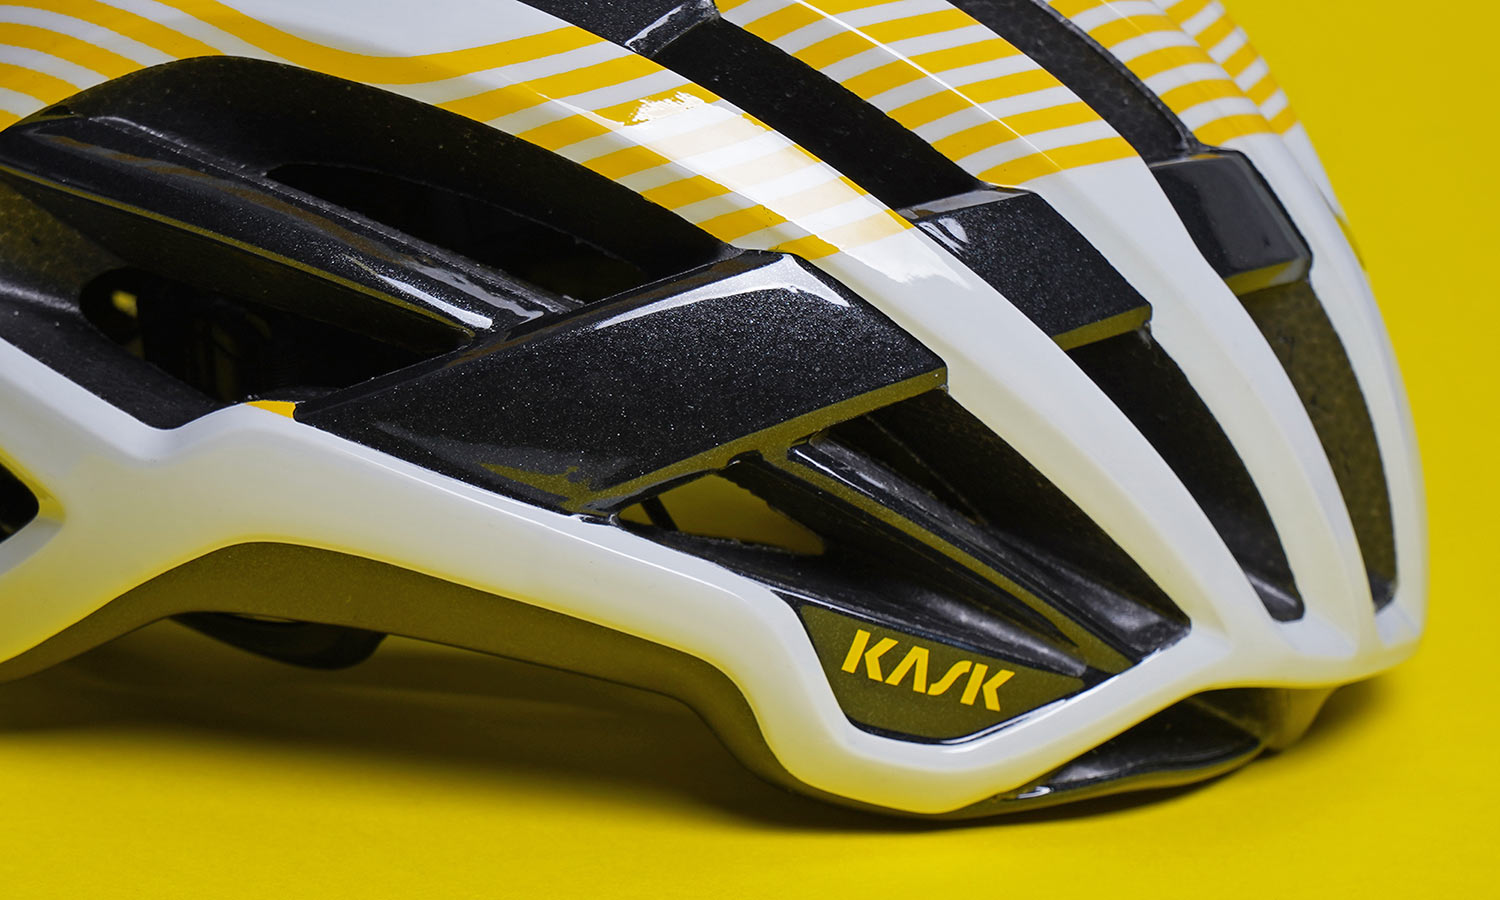 Kask-Valegro-Tour-de-France-limited-edition-lightweight-vented-road-bike-helmet_detail.jpg